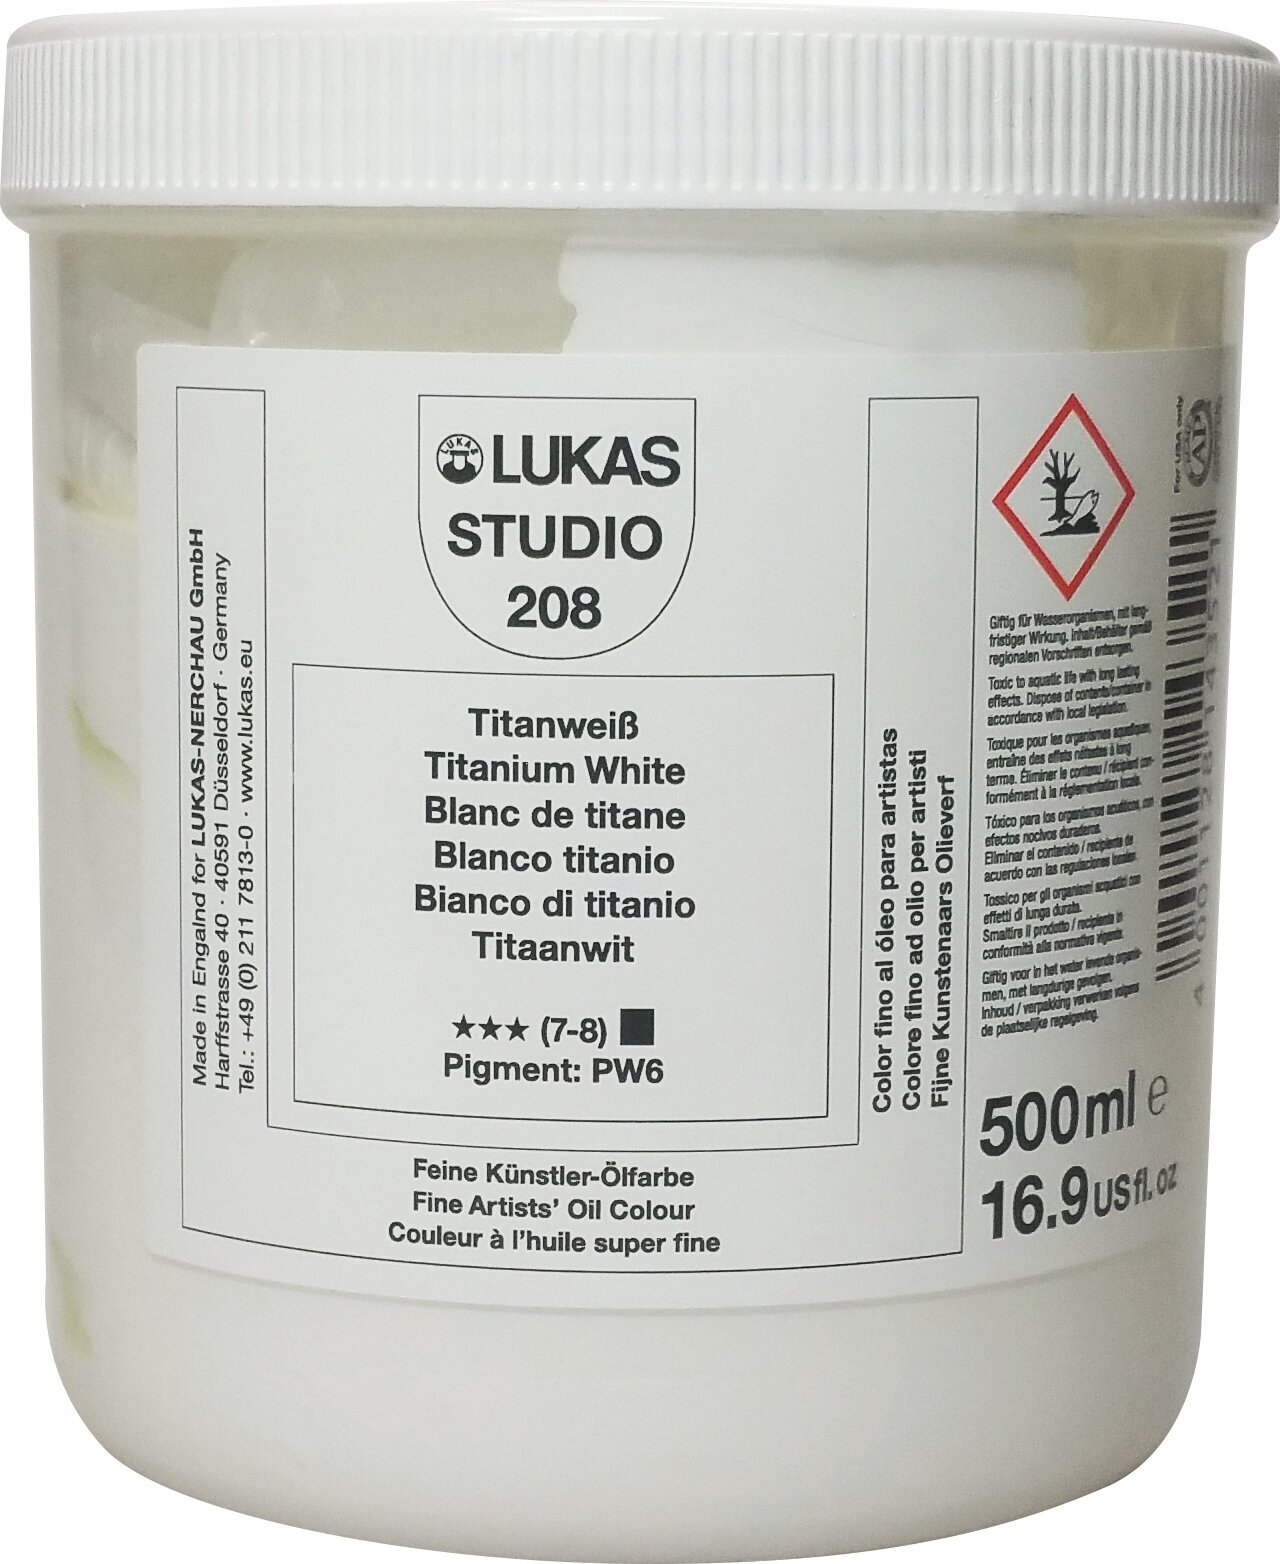 Olieverf Lukas Studio Olieverf 500 ml Titanium White